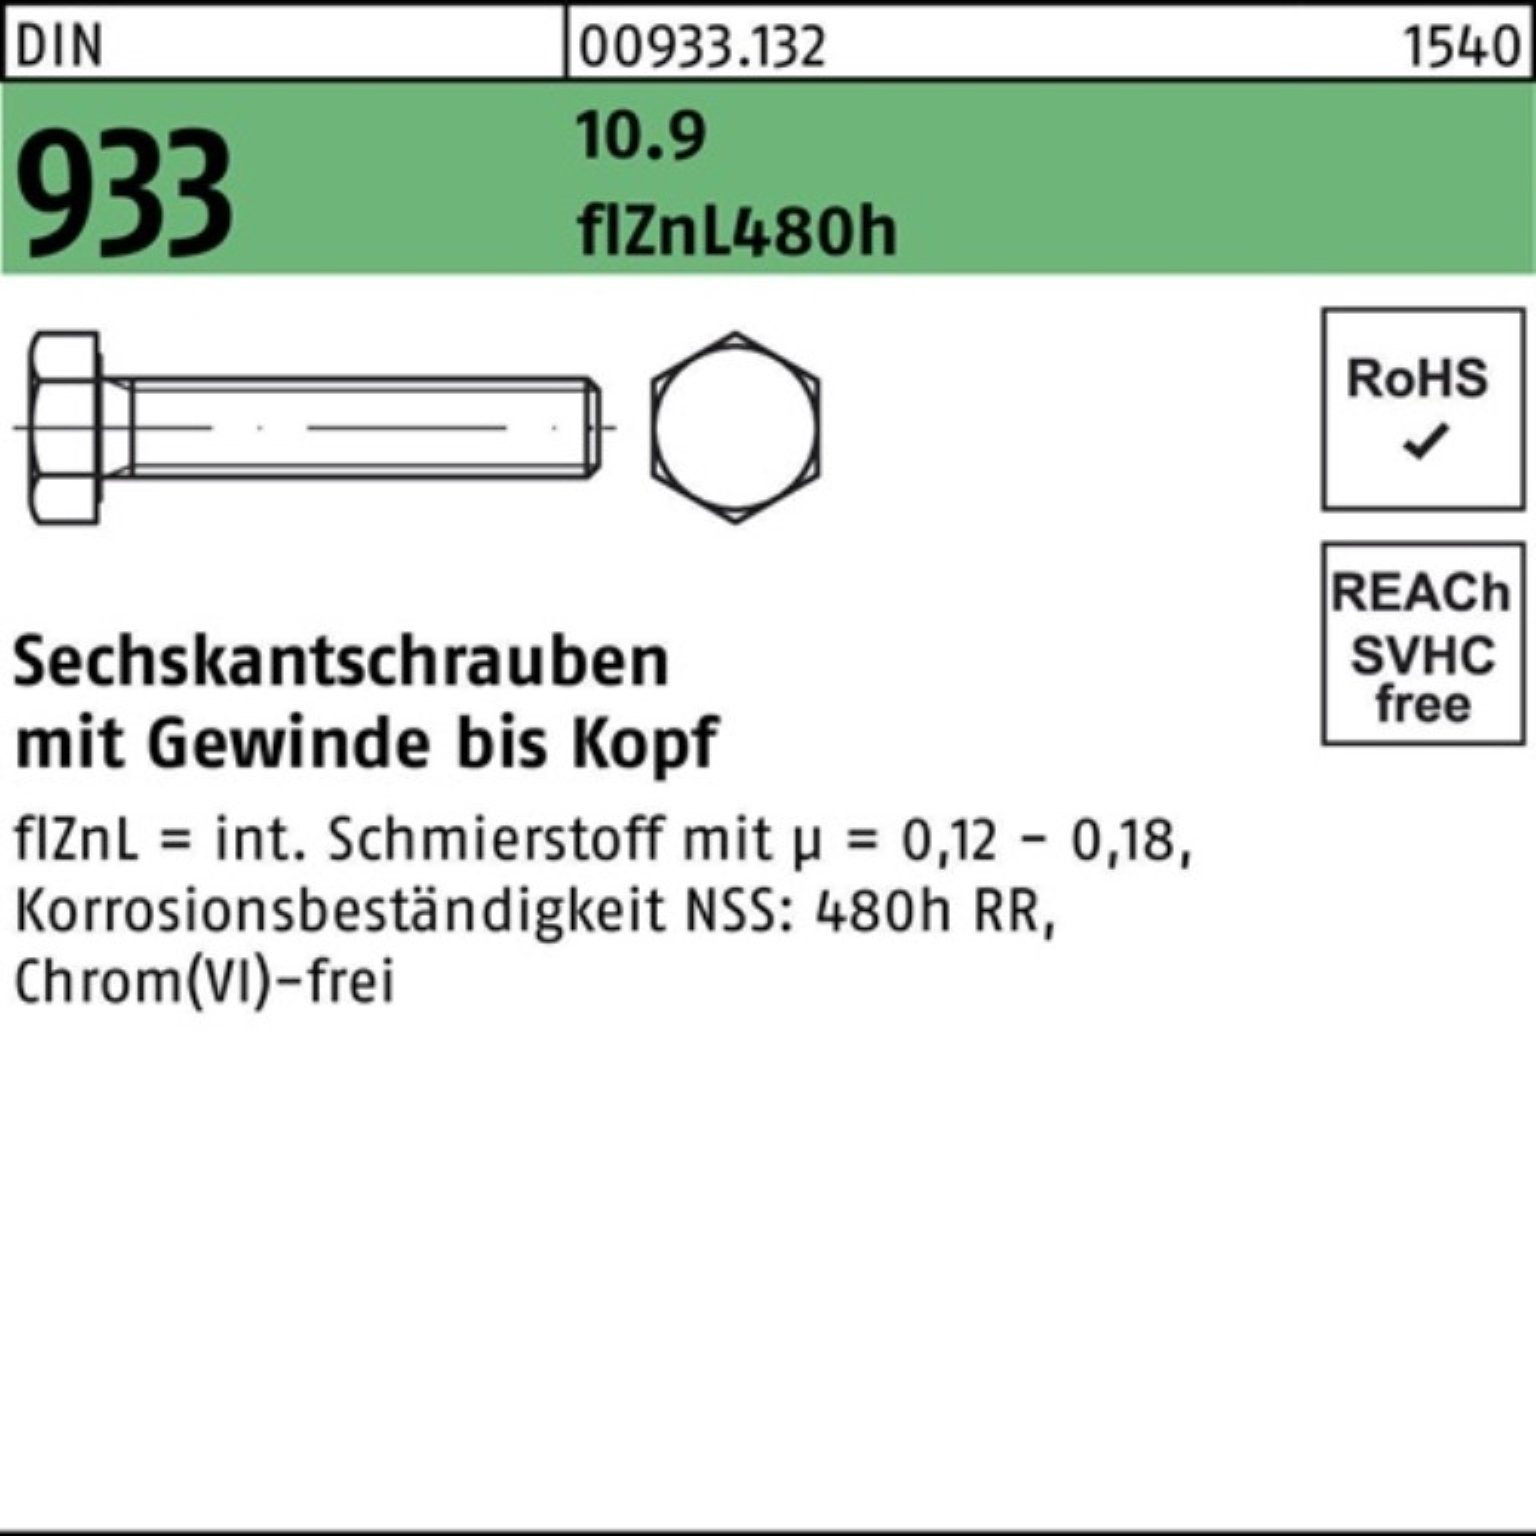 Sechskantschraube 10.9 30 Reyher M8x Sechskantschraube 933 VG DIN flZnL/nc/x/x/480h Pack 200er